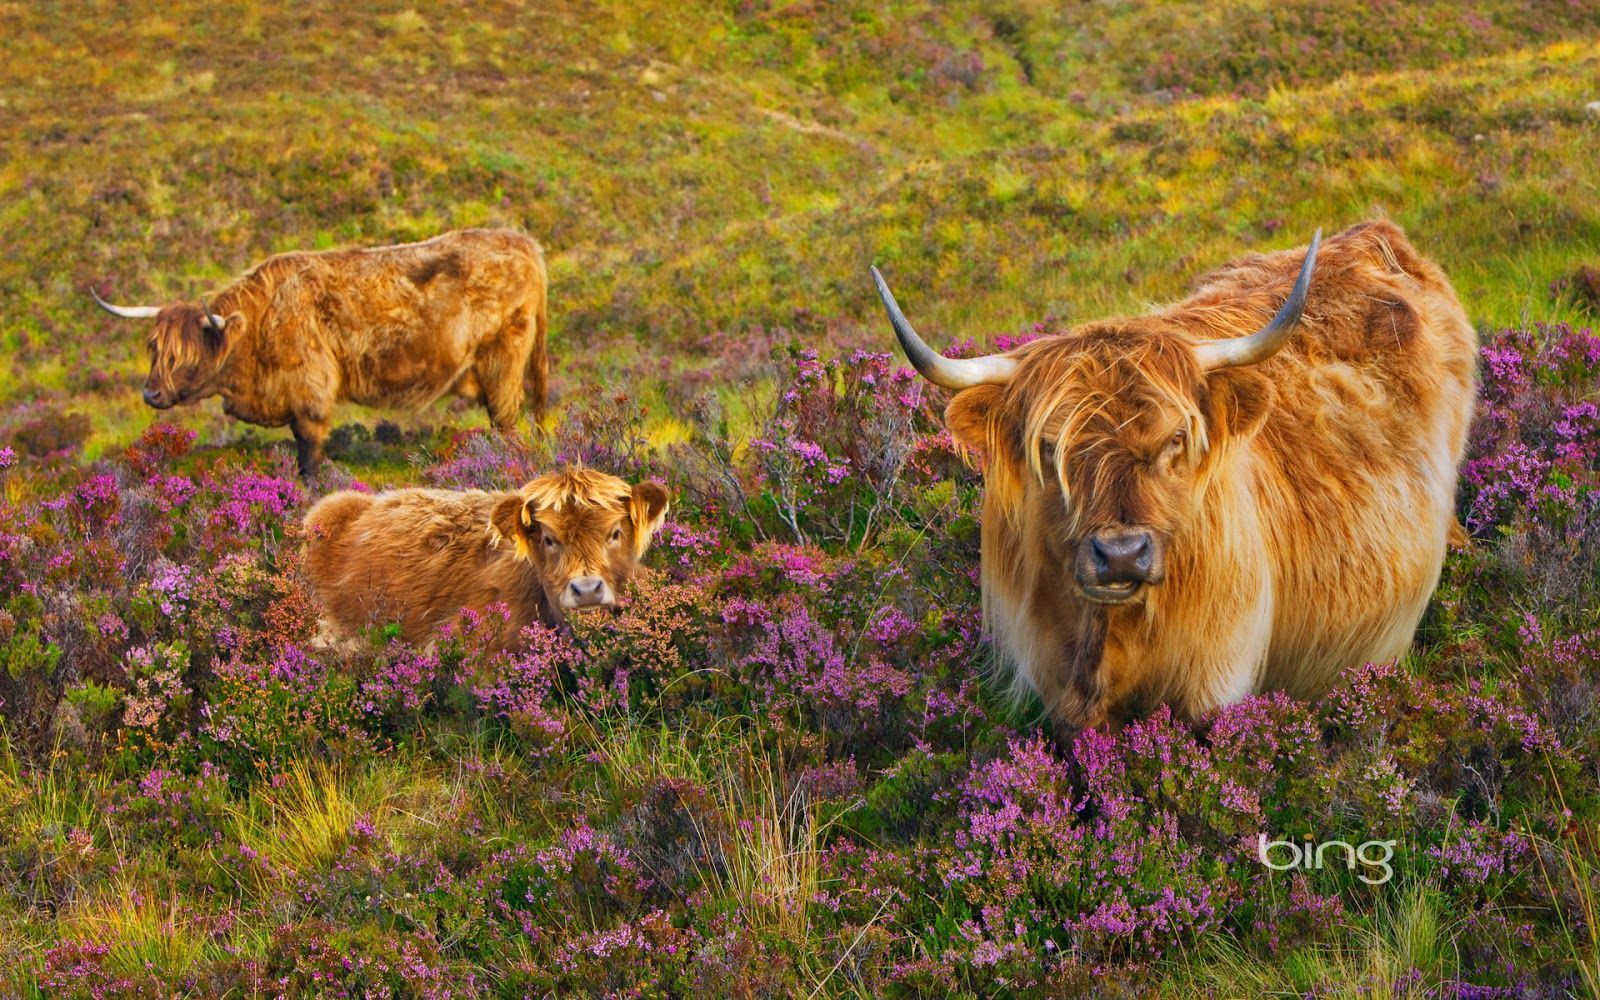 Bing Wallpaper Archive. Bing Wallpaper Daily 2013.05.07. Highland cattle, Scottish highland cow, Animals